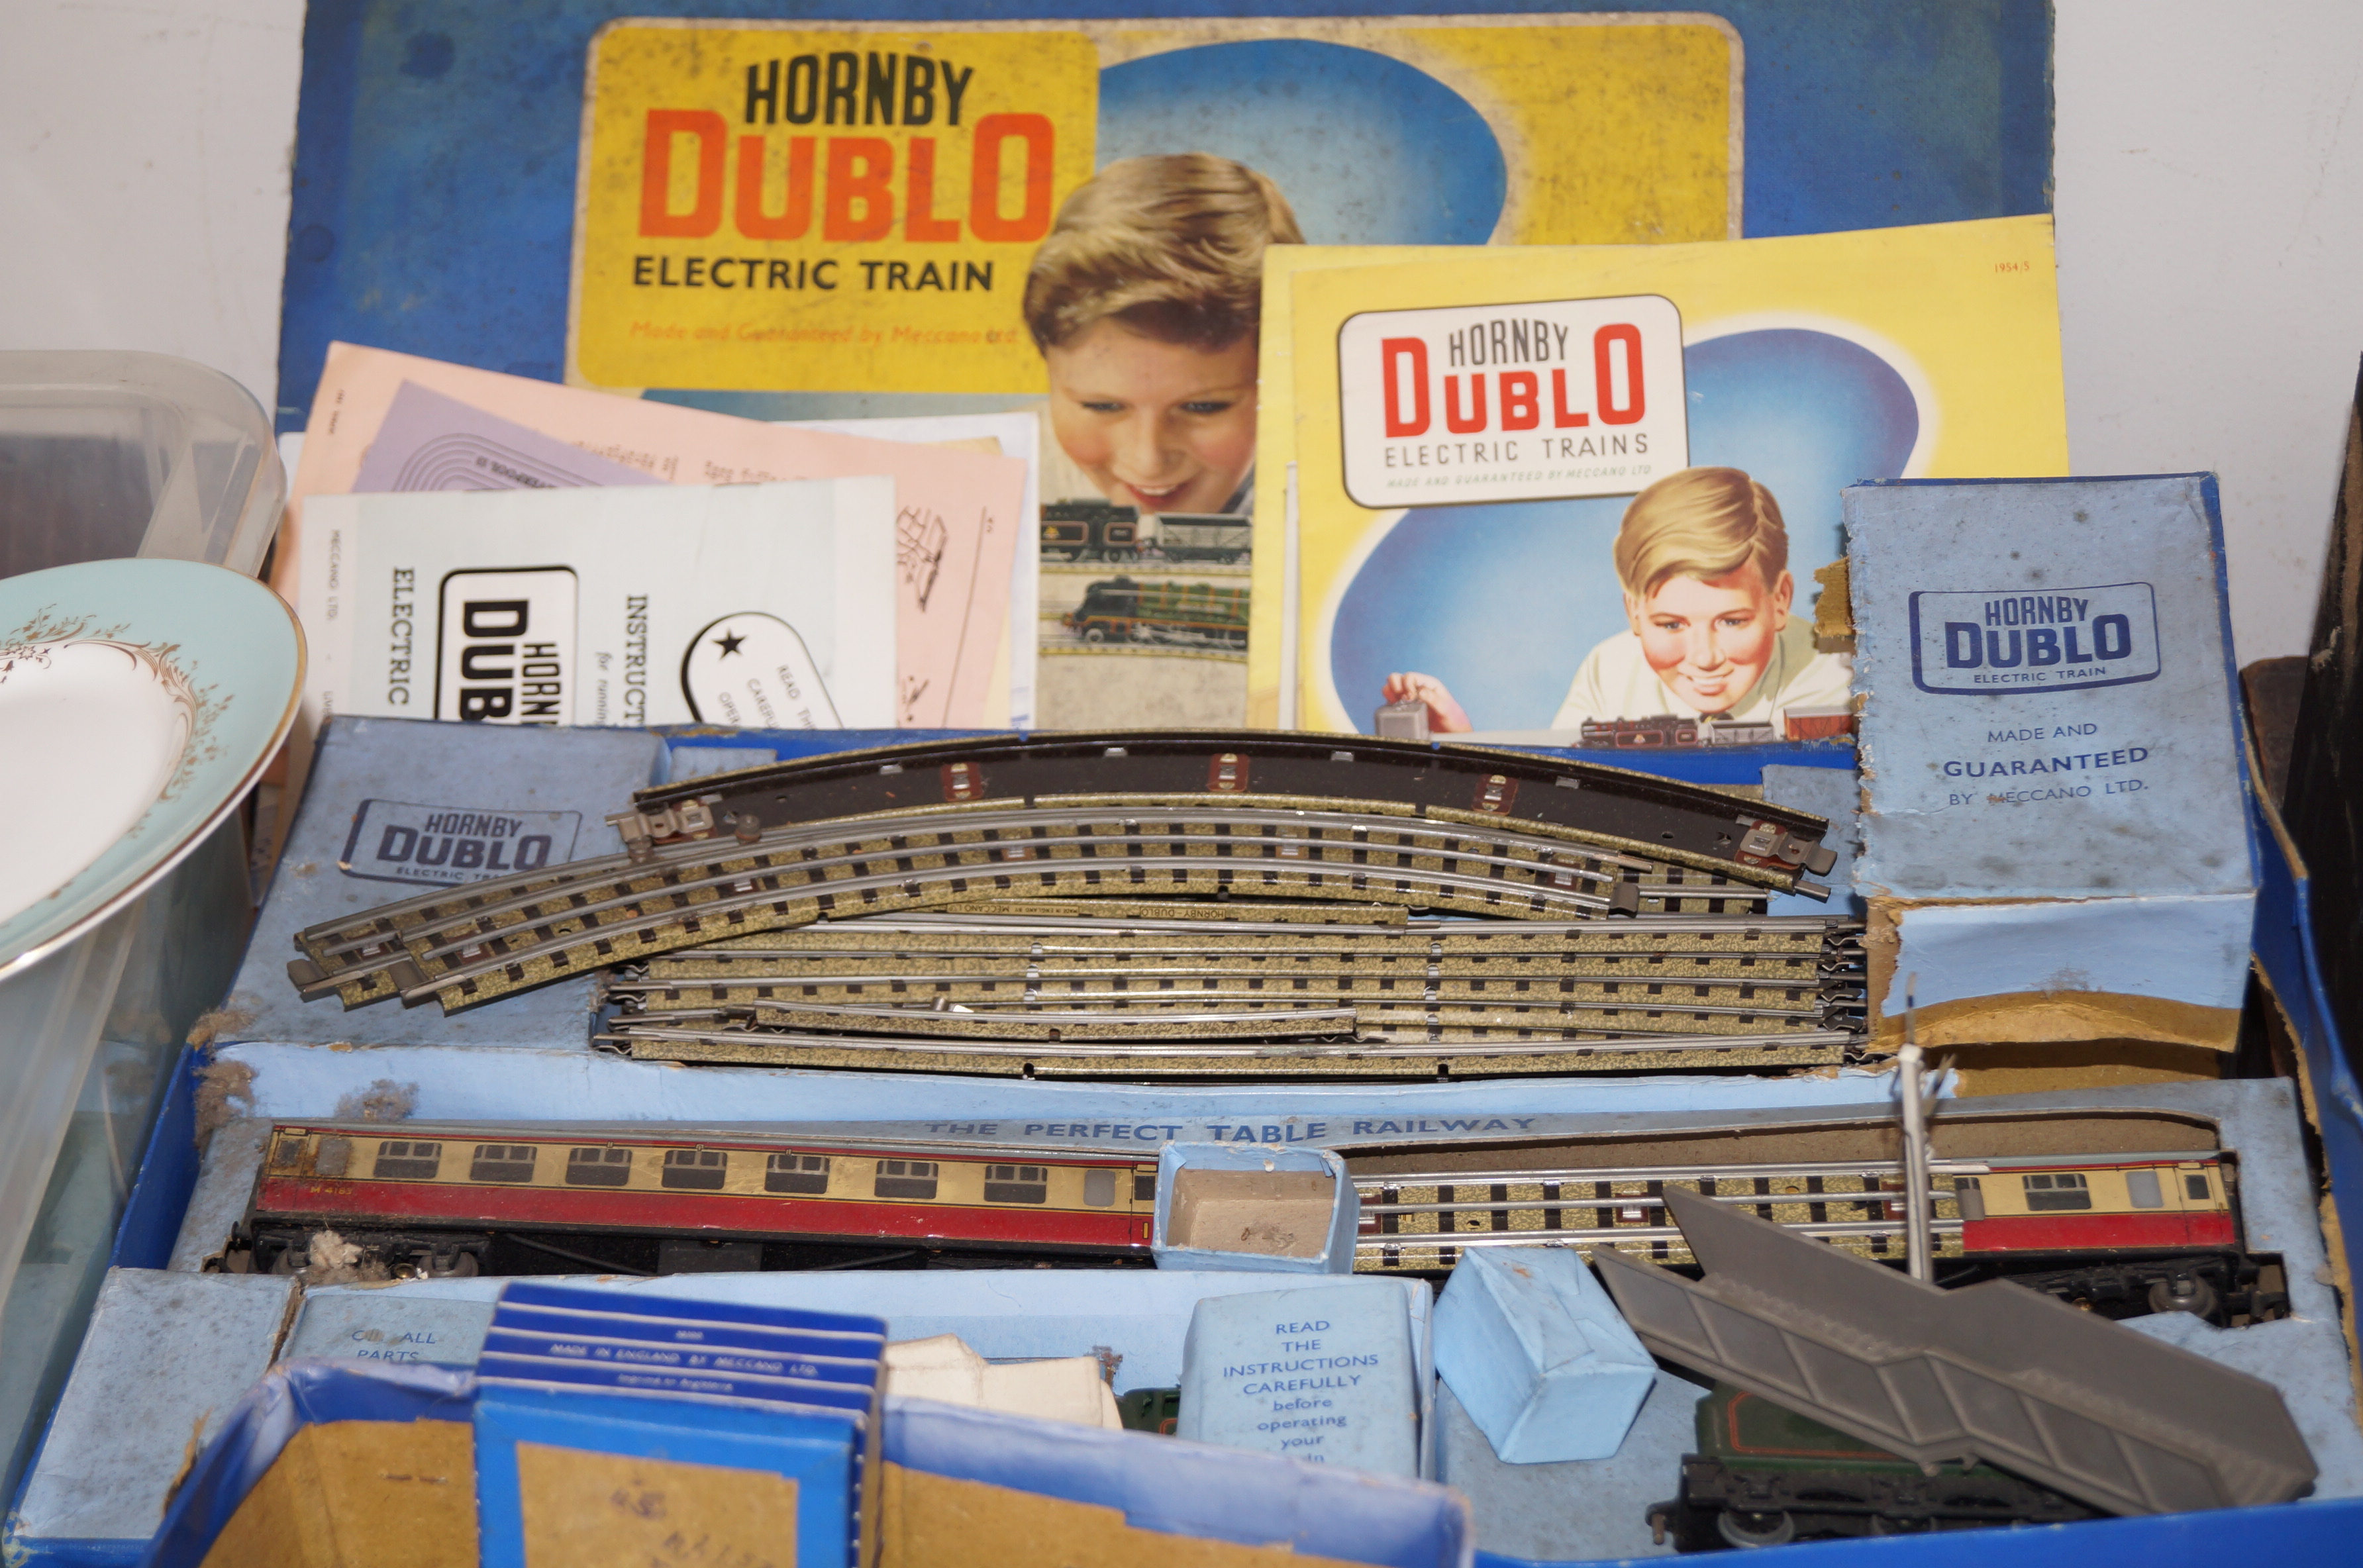 Hornby Dublo electric train set